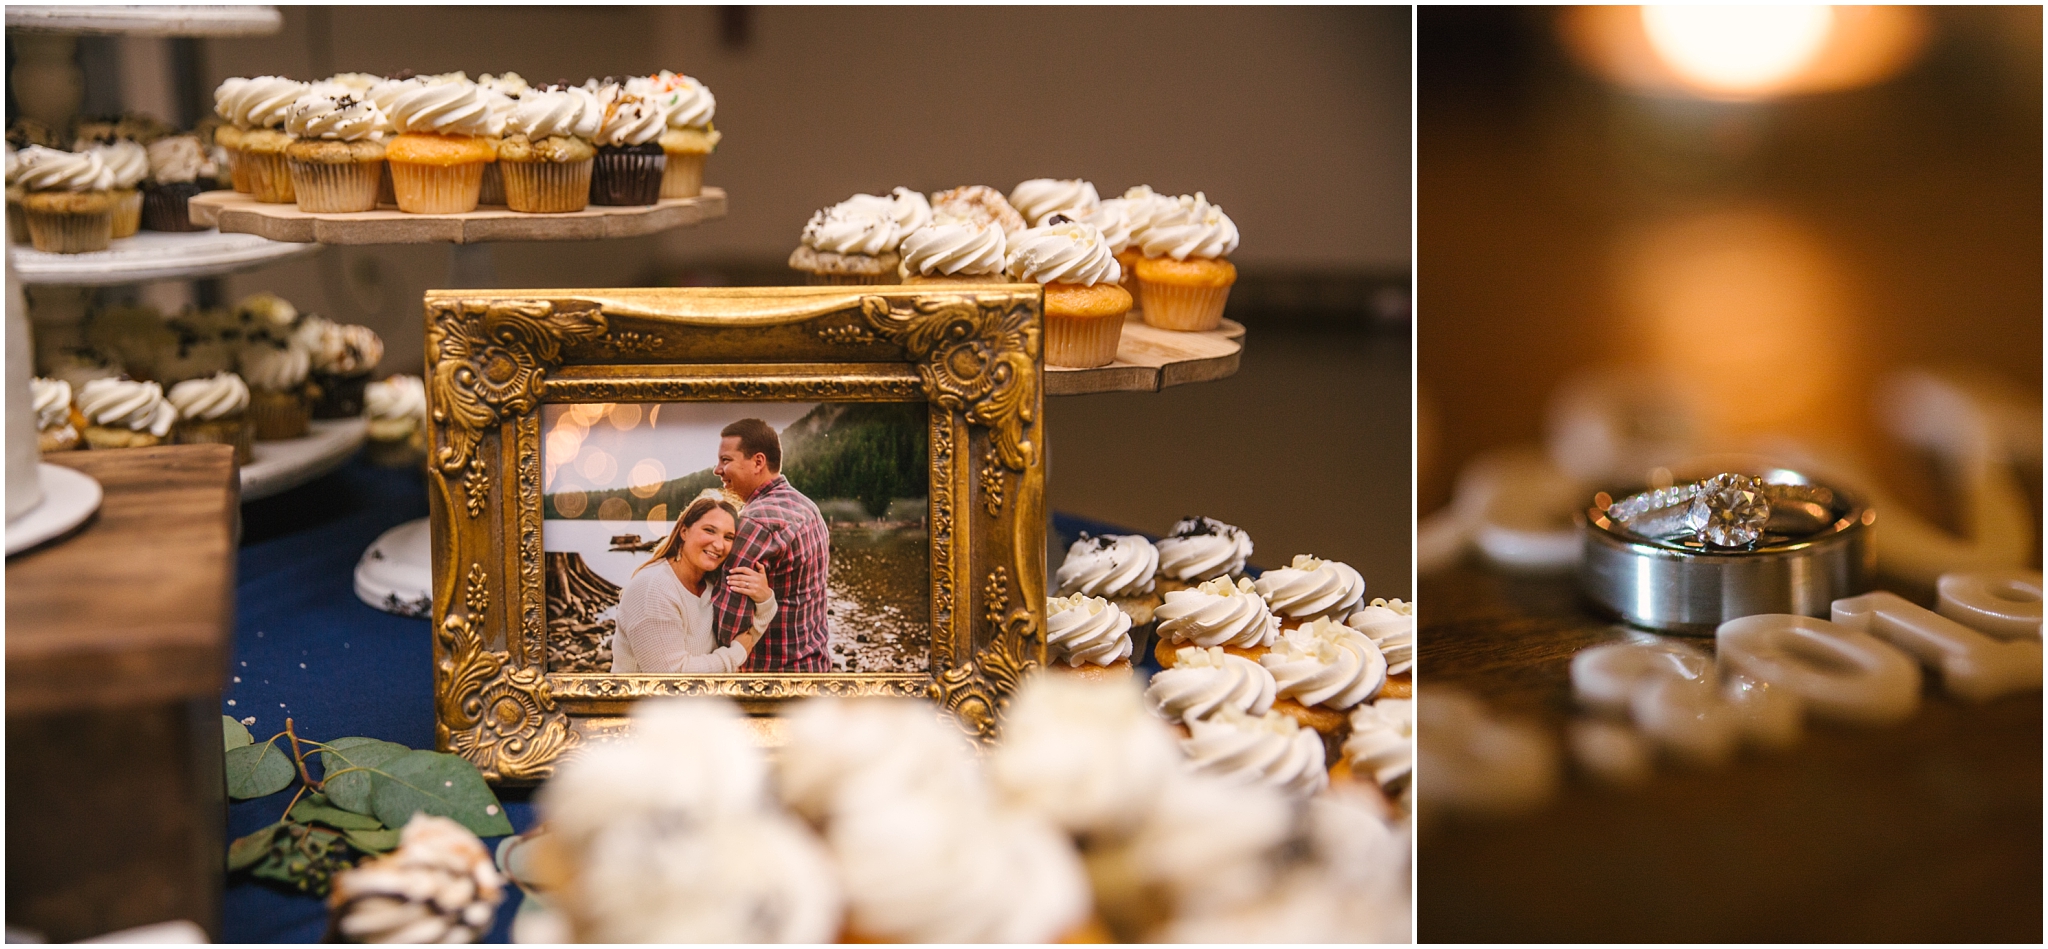 Gracene's Cupcakes at Pickering Barn wedding in Issaquah Washington